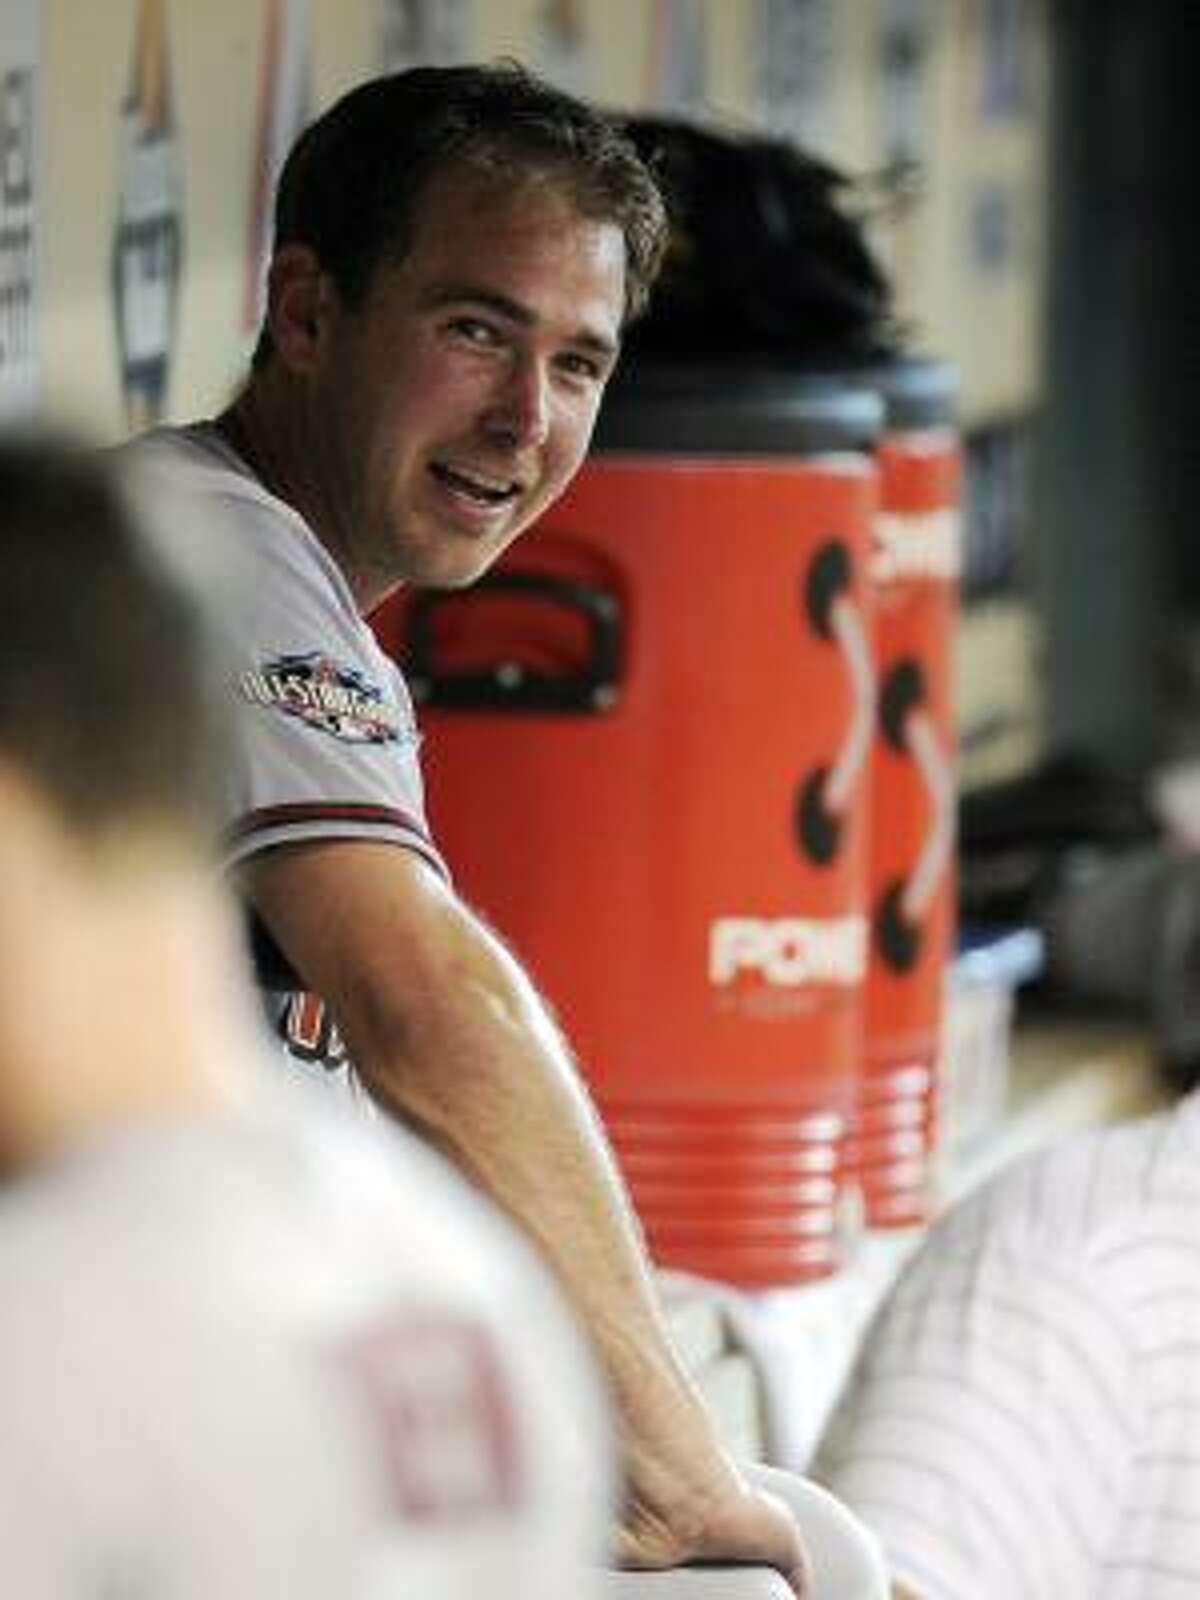 Diamondbacks pitcher Zach Duke smiles in the dugout after hitting a three-run home run.